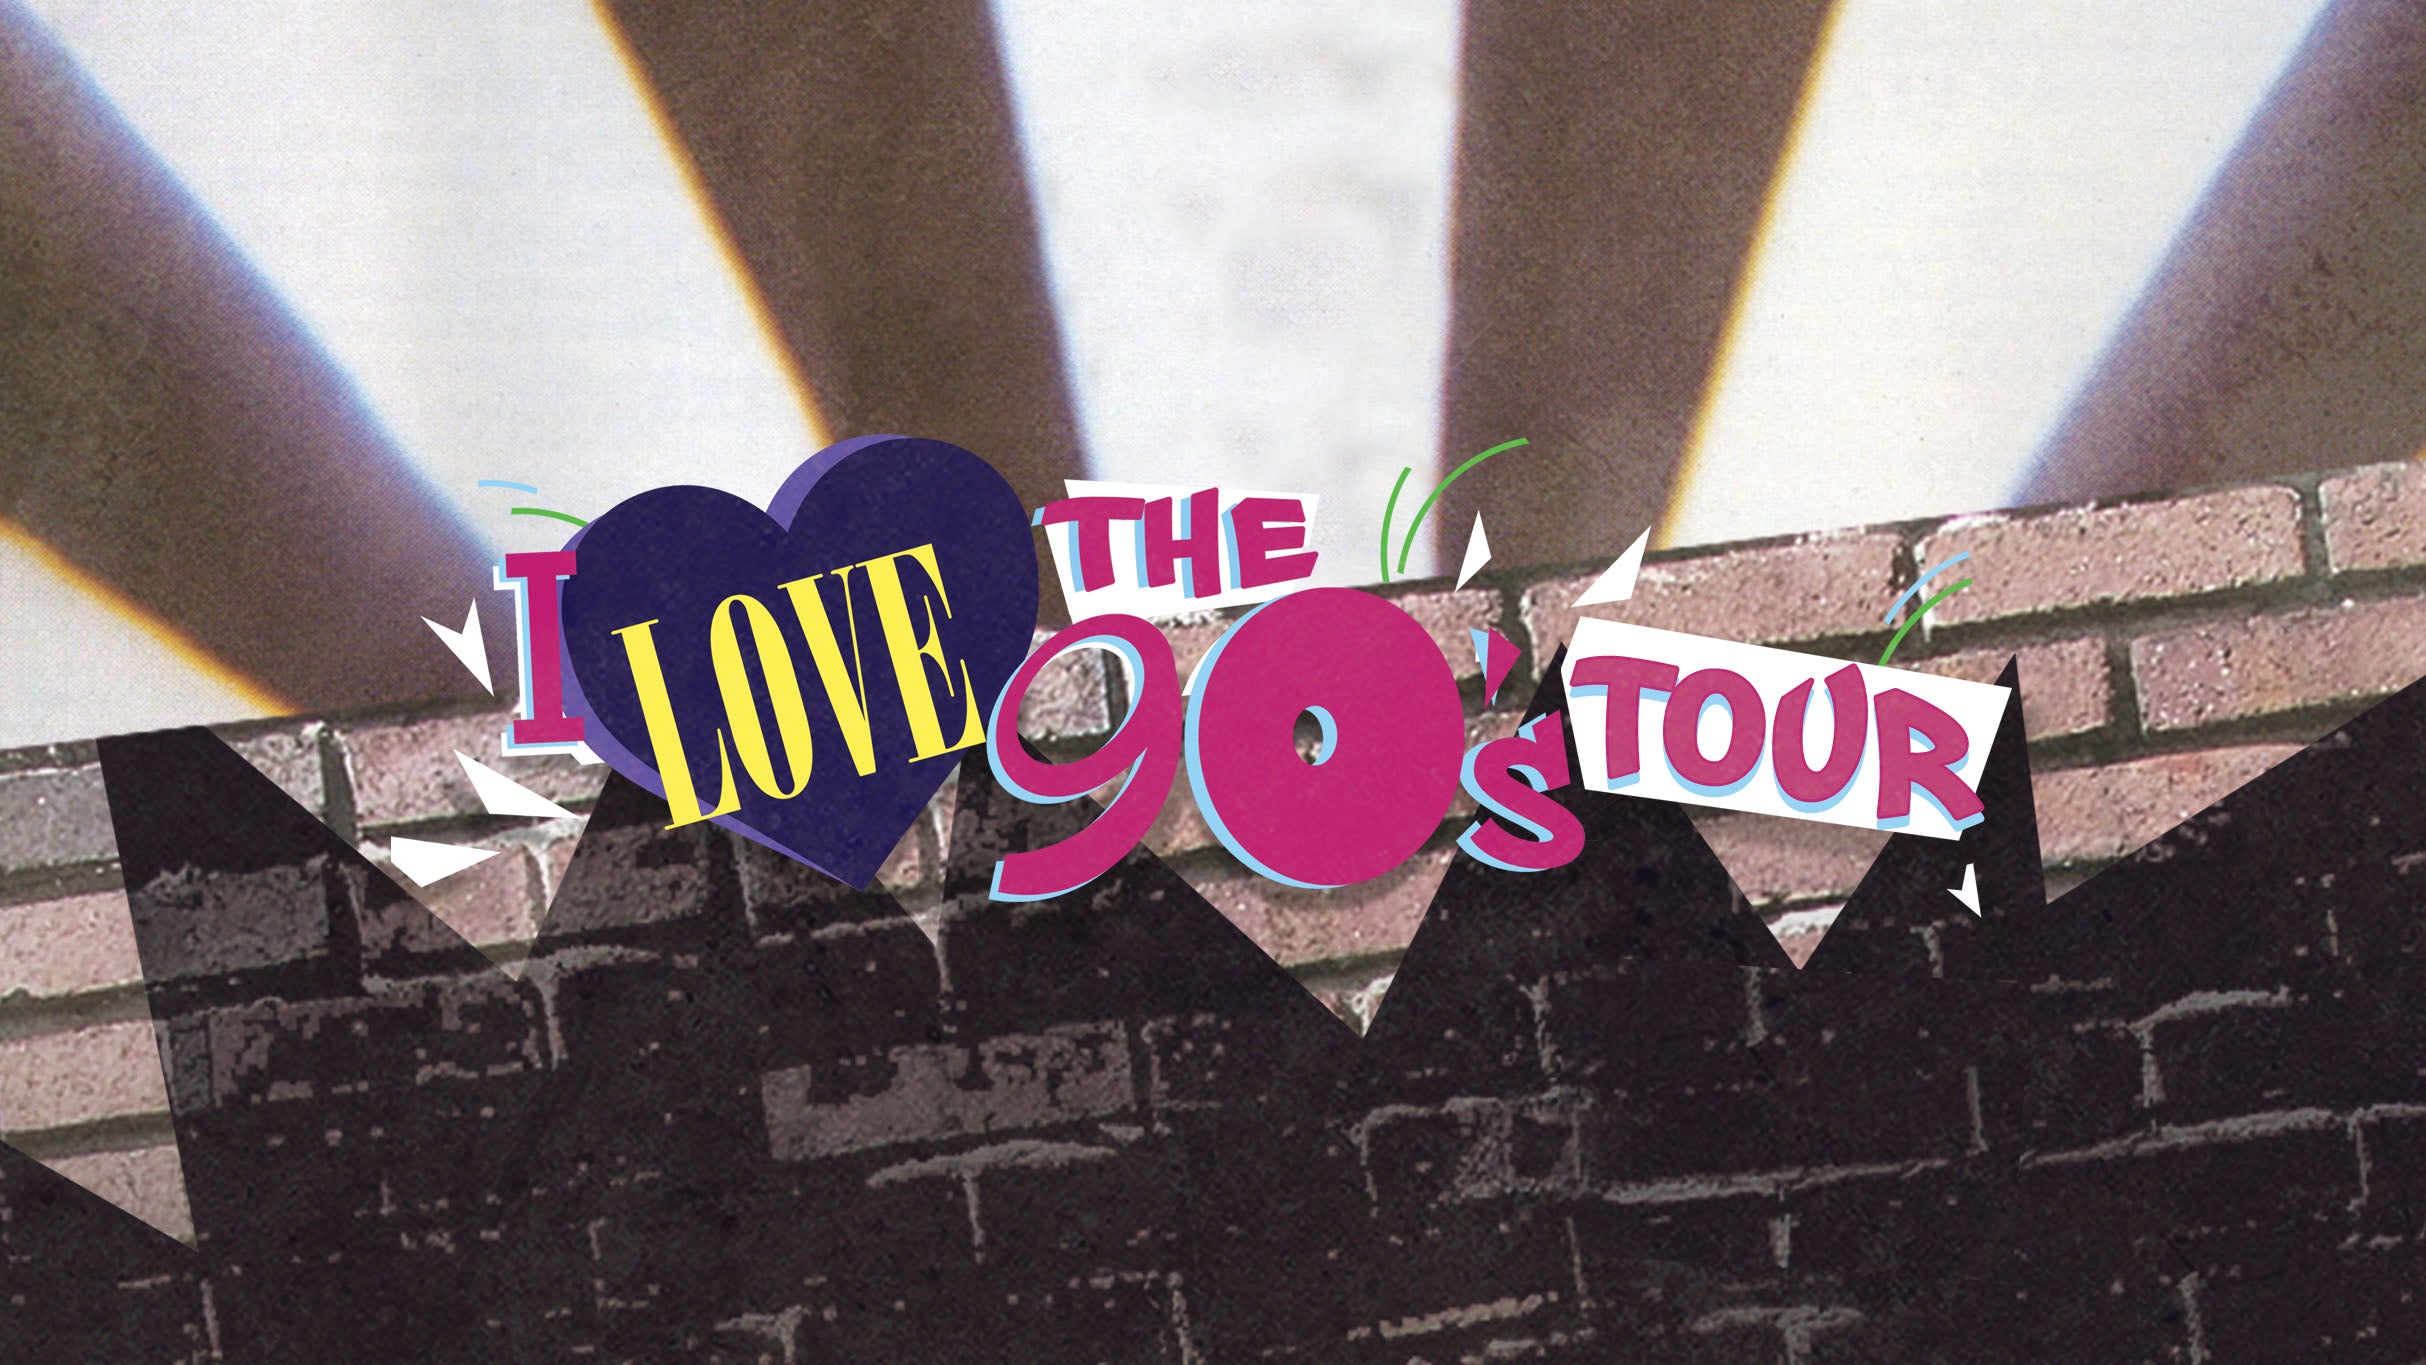 I Love The 90's Tour in Primm promo photo for Citi® Cardmember presale offer code